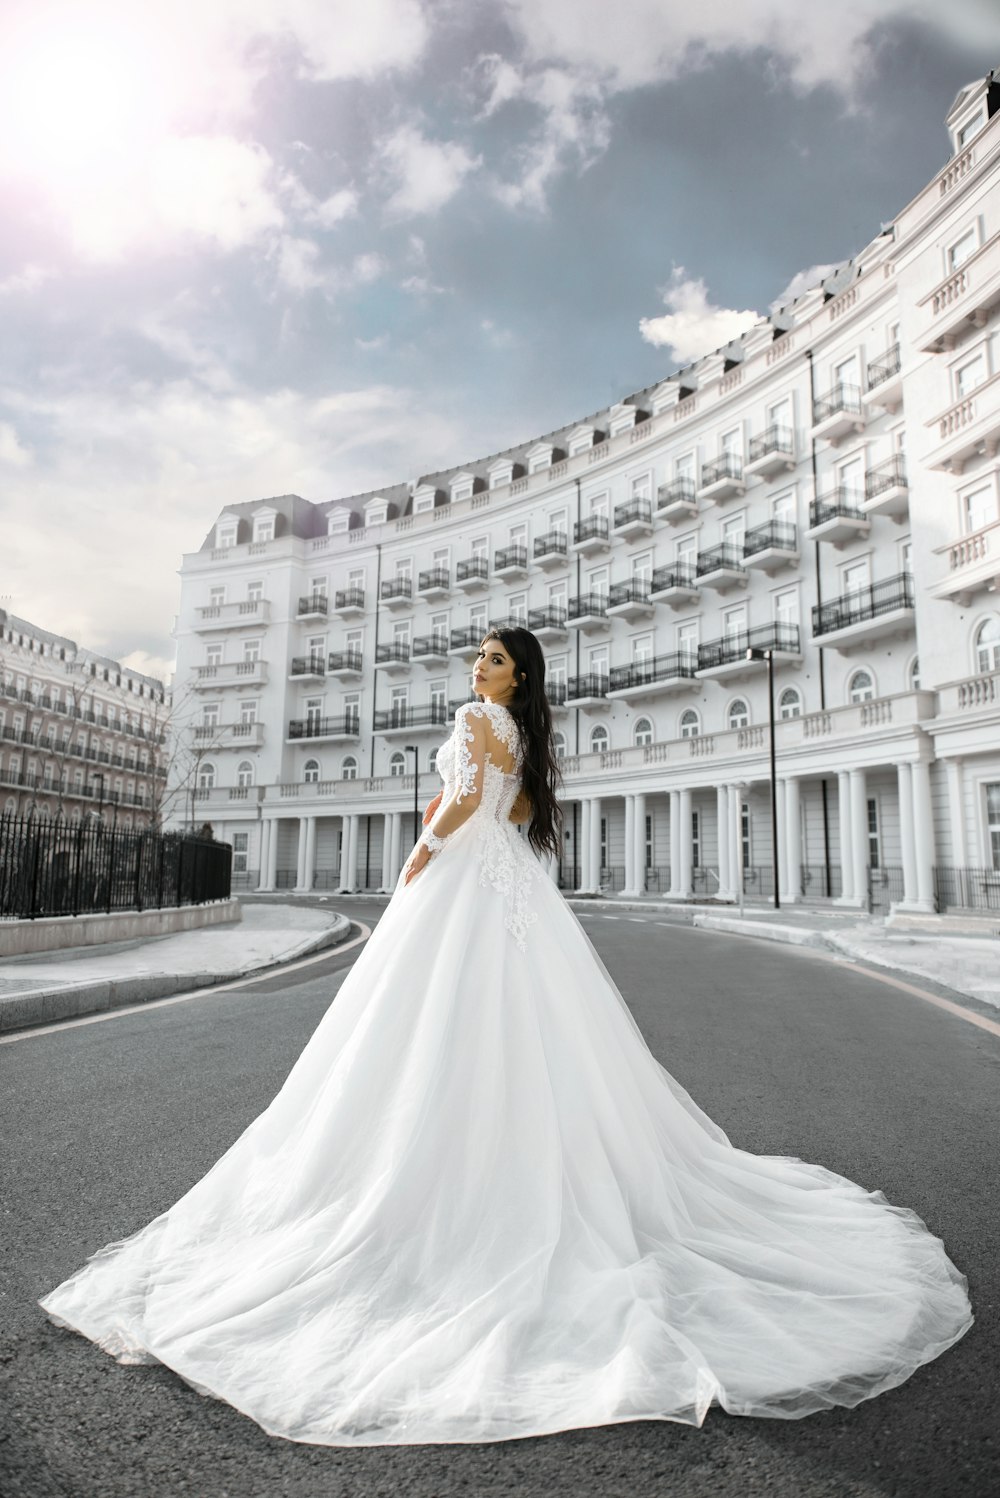 a woman in a wedding dress standing on a street